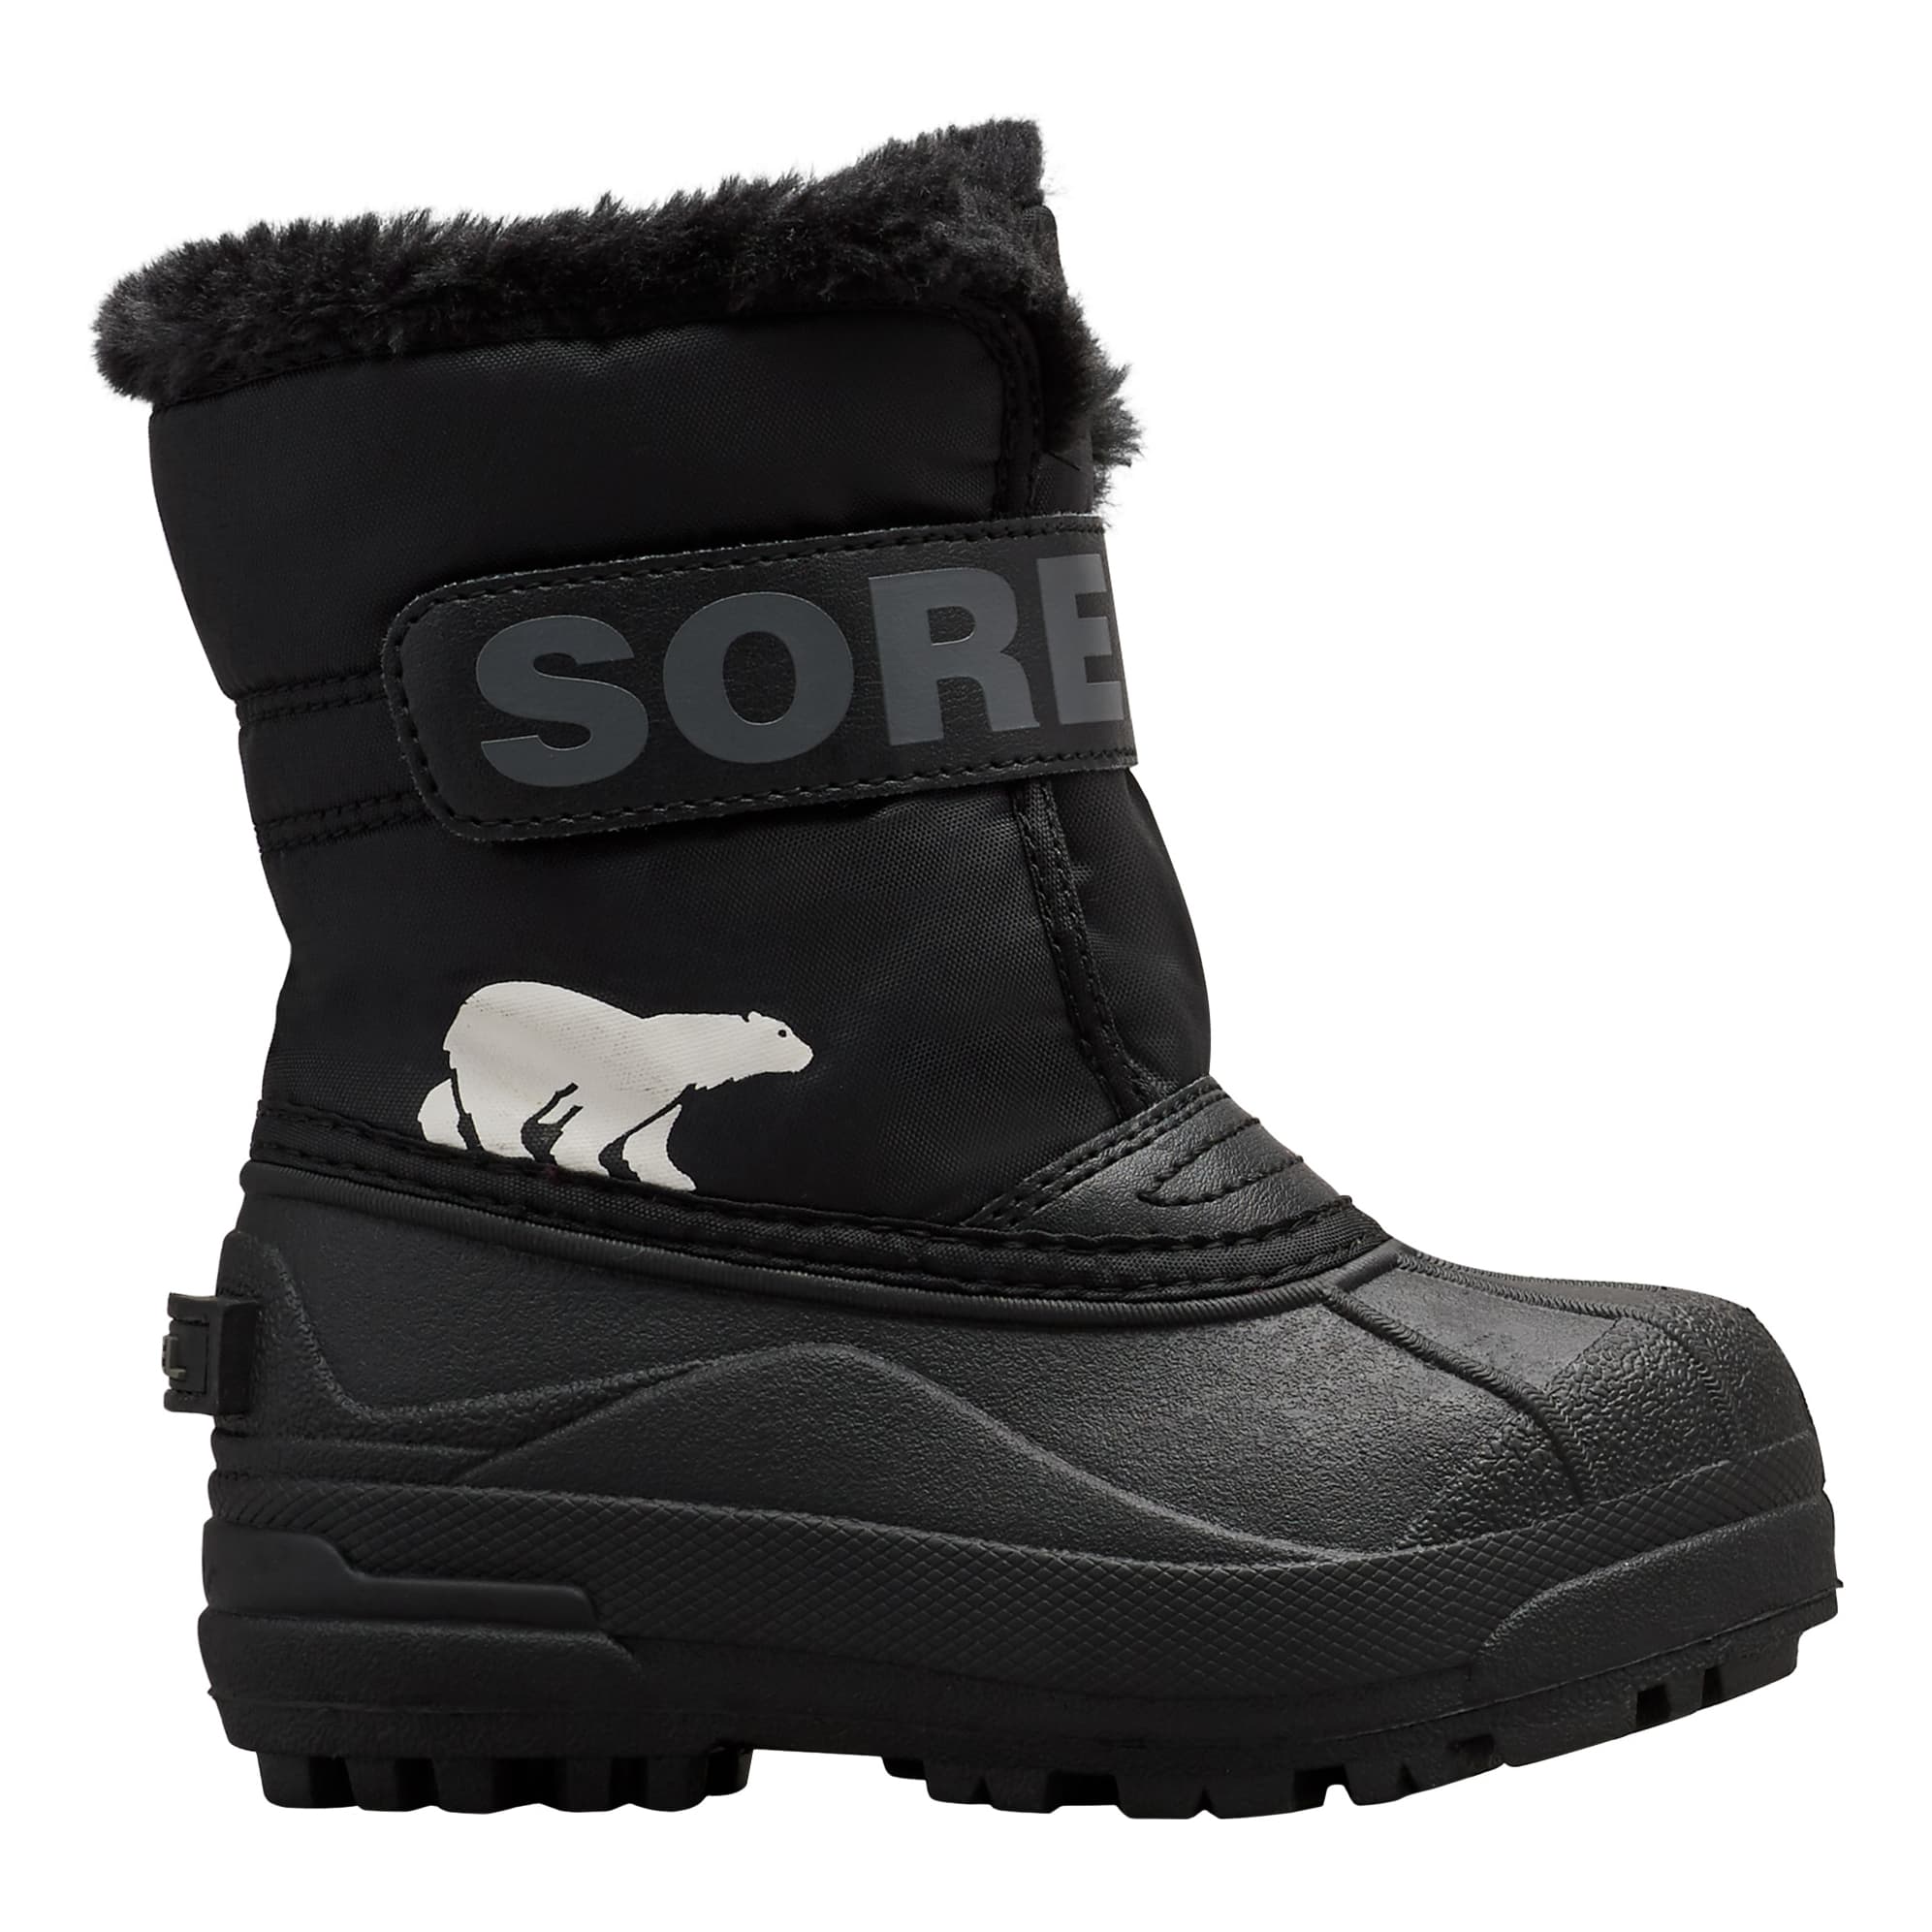 Sorel® Children's Snow Commander Boot - Black/Charcoal